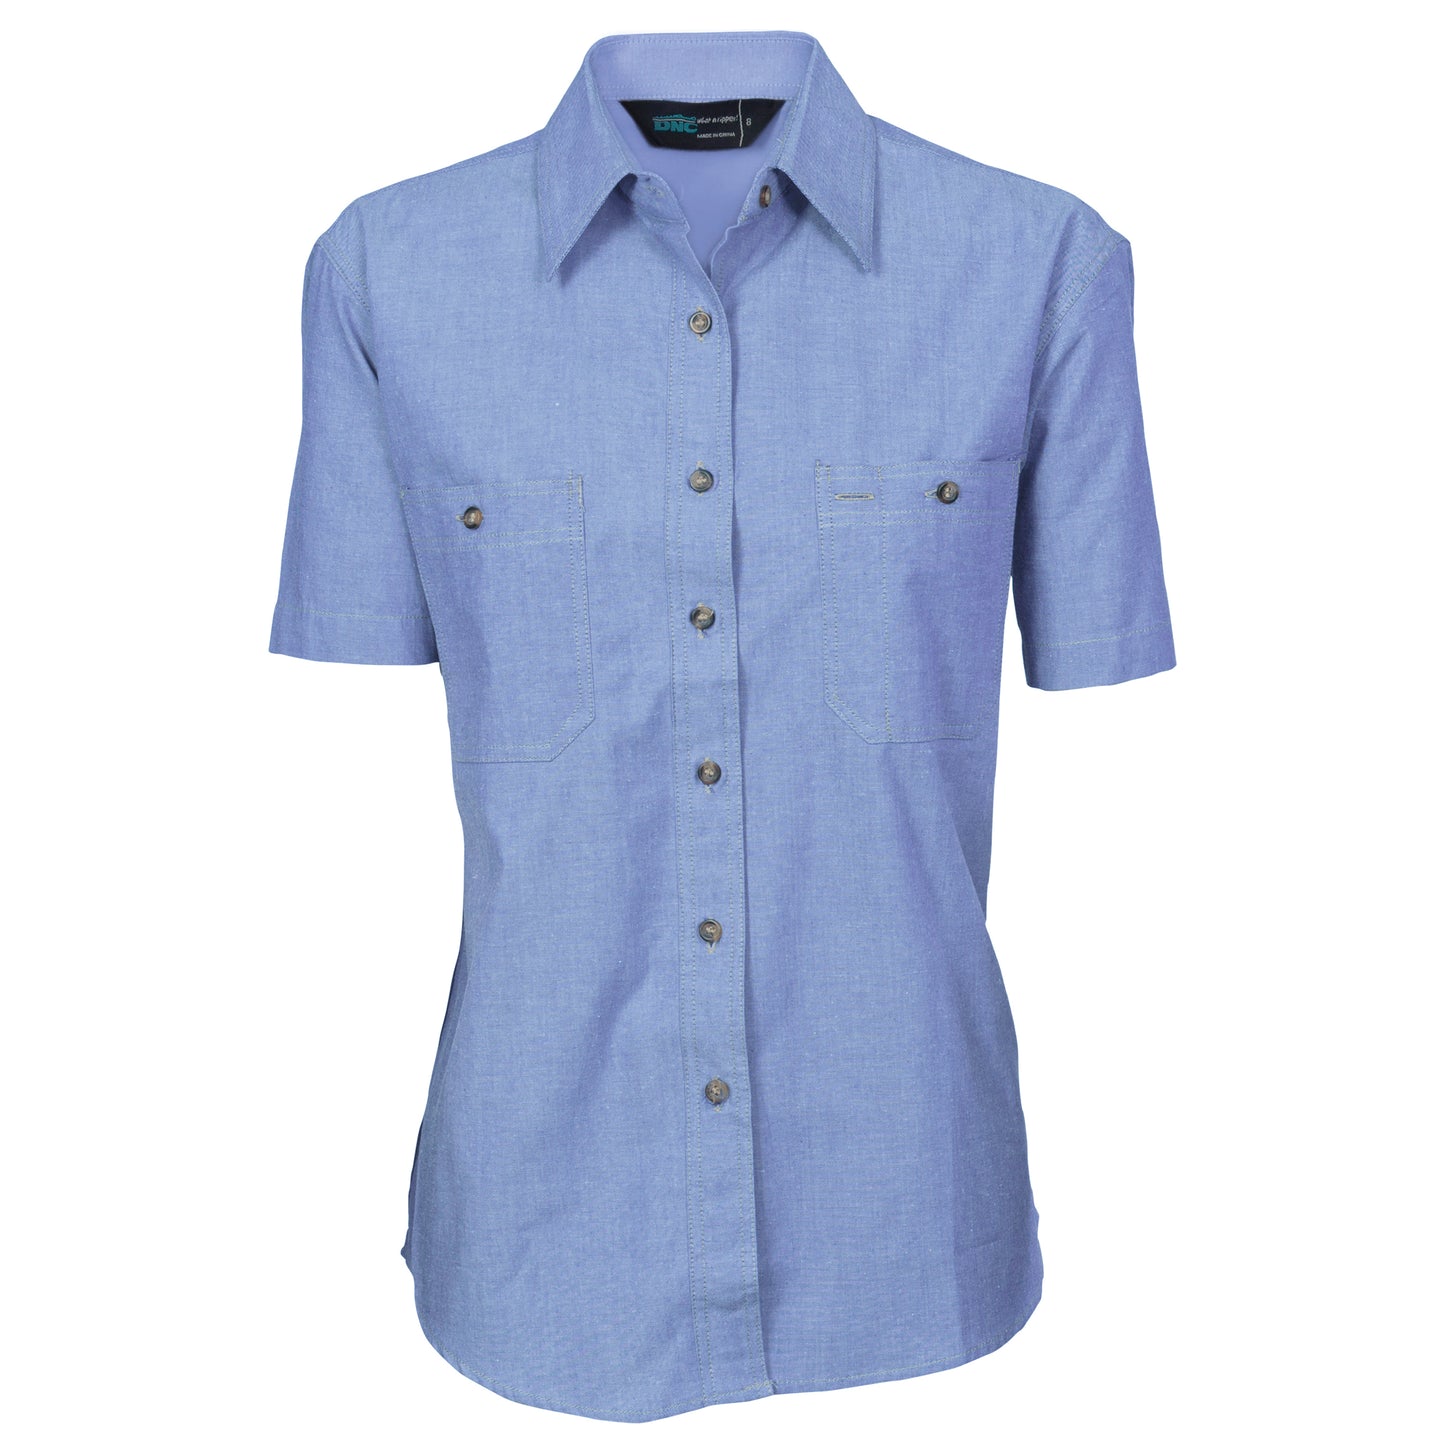 DNC Ladies Cotton Chambray Shirt - Short Sleeve 4105 - Star Uniforms Australia